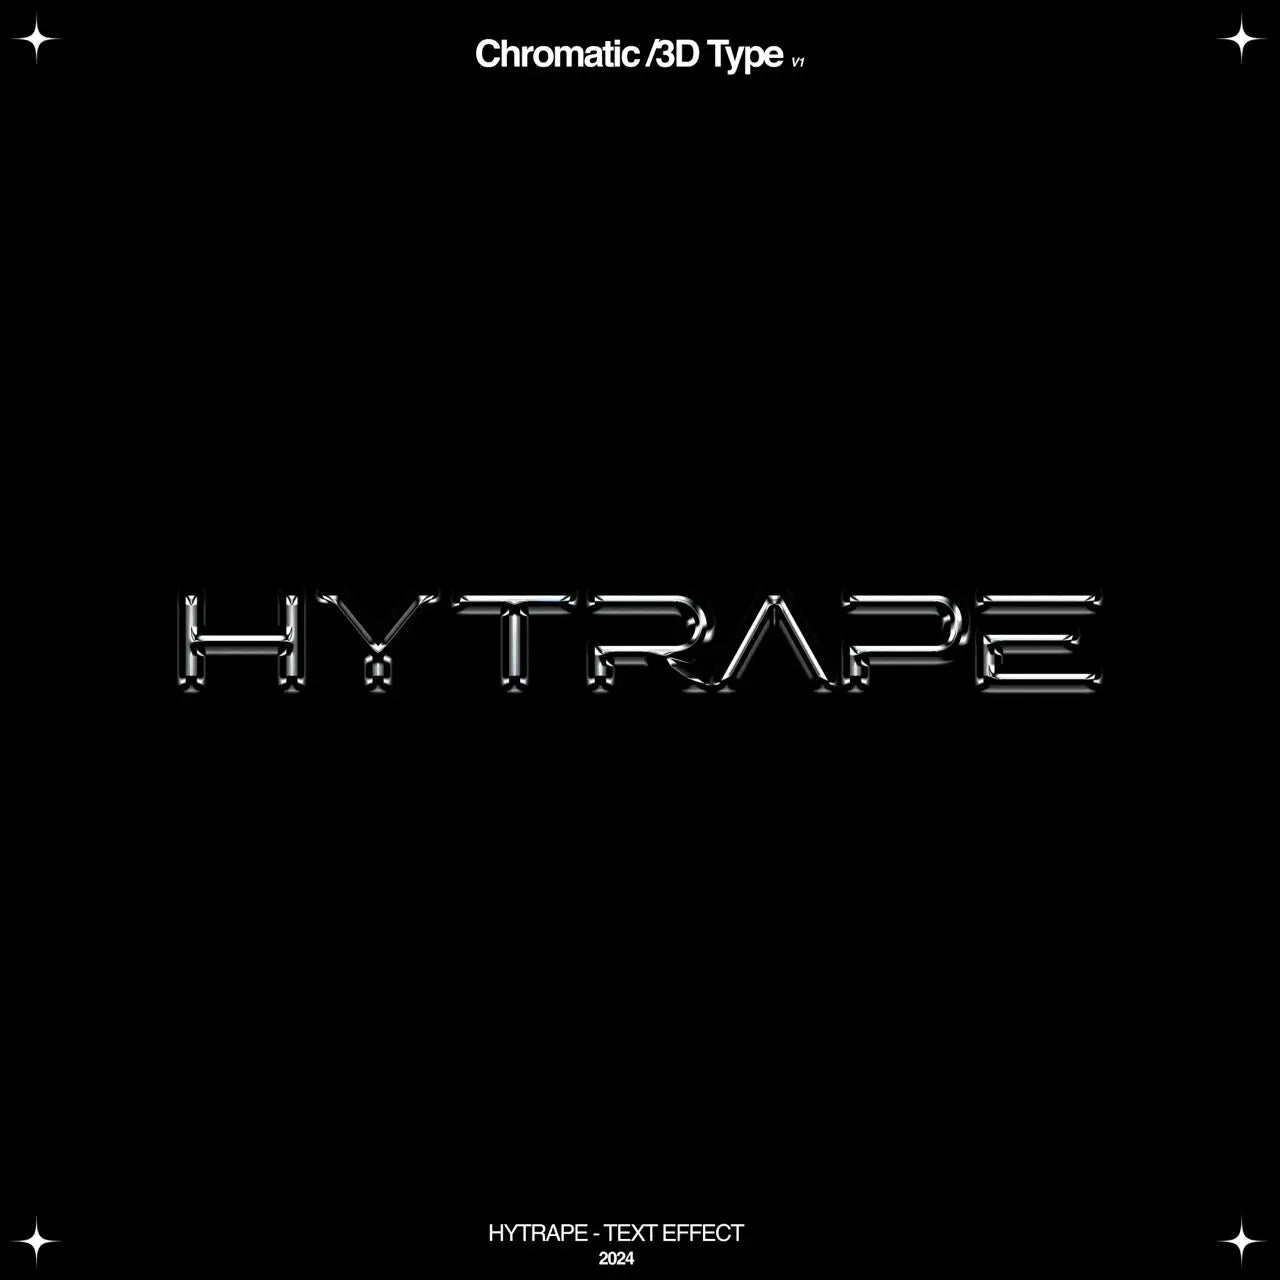 CHROMATIC/3D TEXT EFFECT HYTRAPE